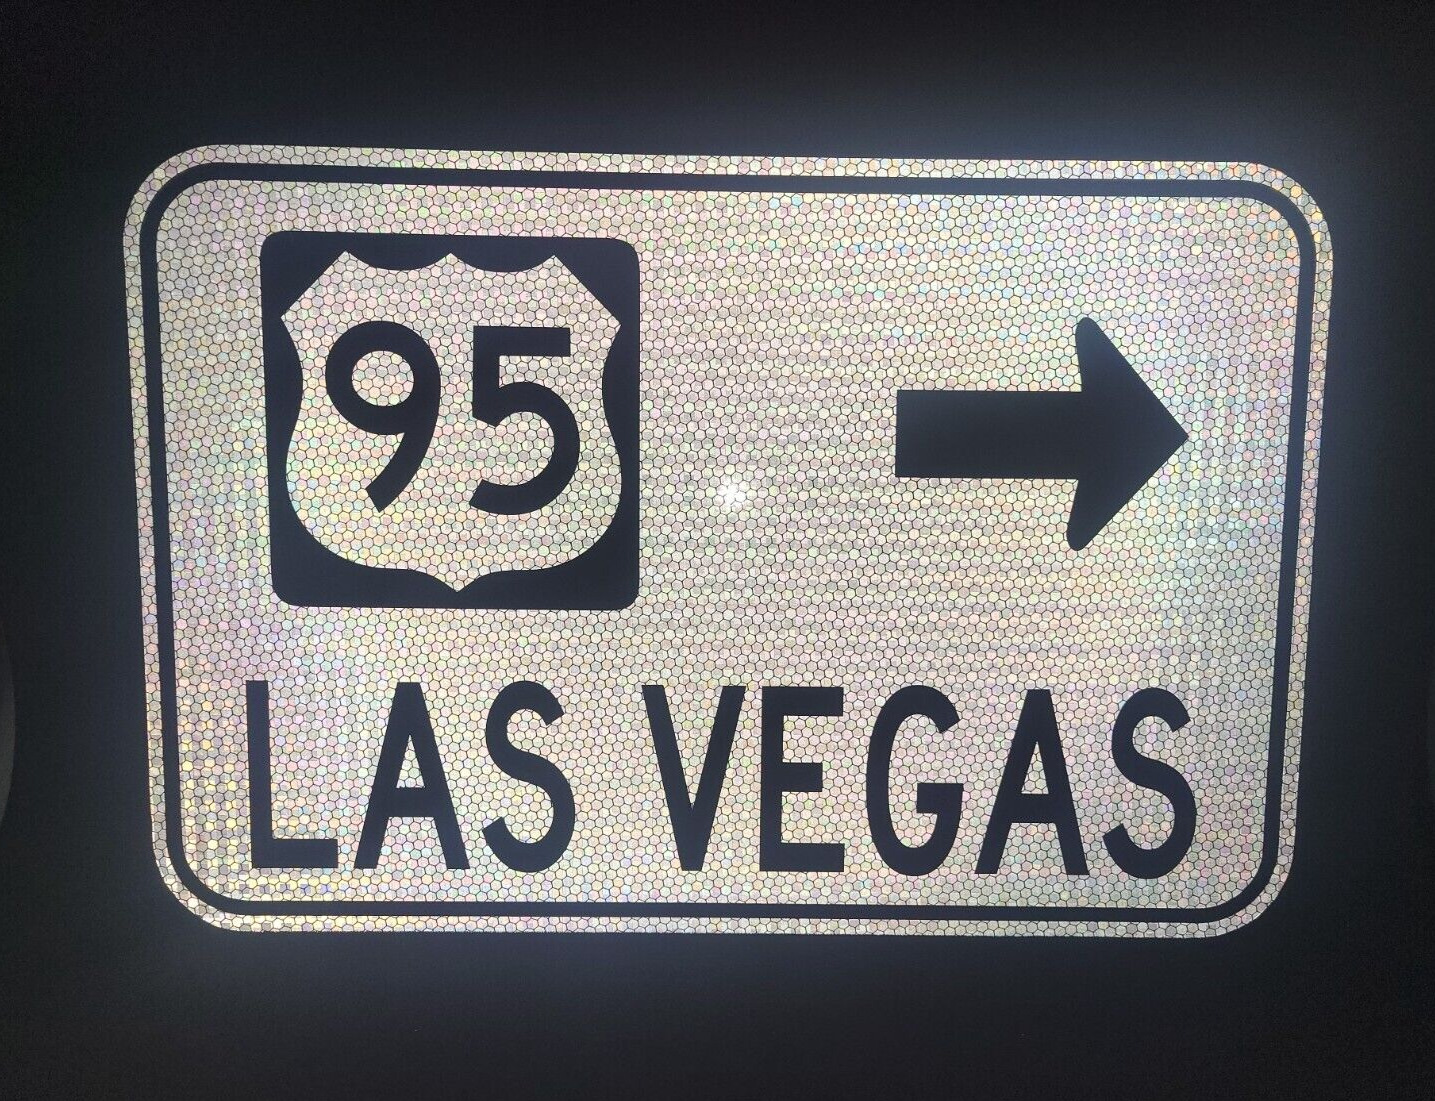 LAS VEGAS HWY 95, Nevada route road sign - Las Vegas, SIN CITY, Oakland Raiders